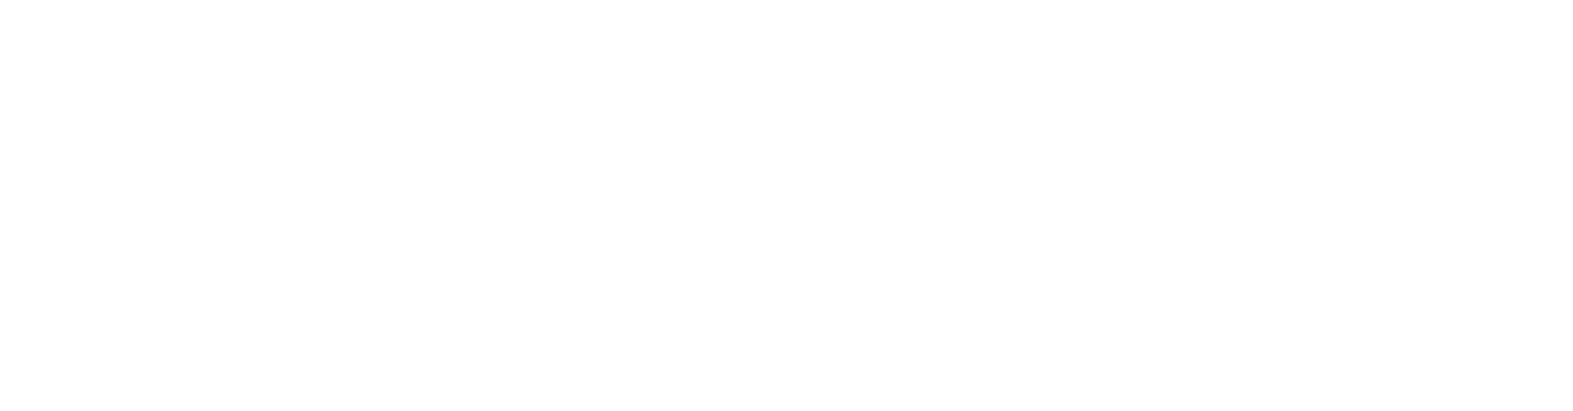 Tetra Tech
 logo large for dark backgrounds (transparent PNG)